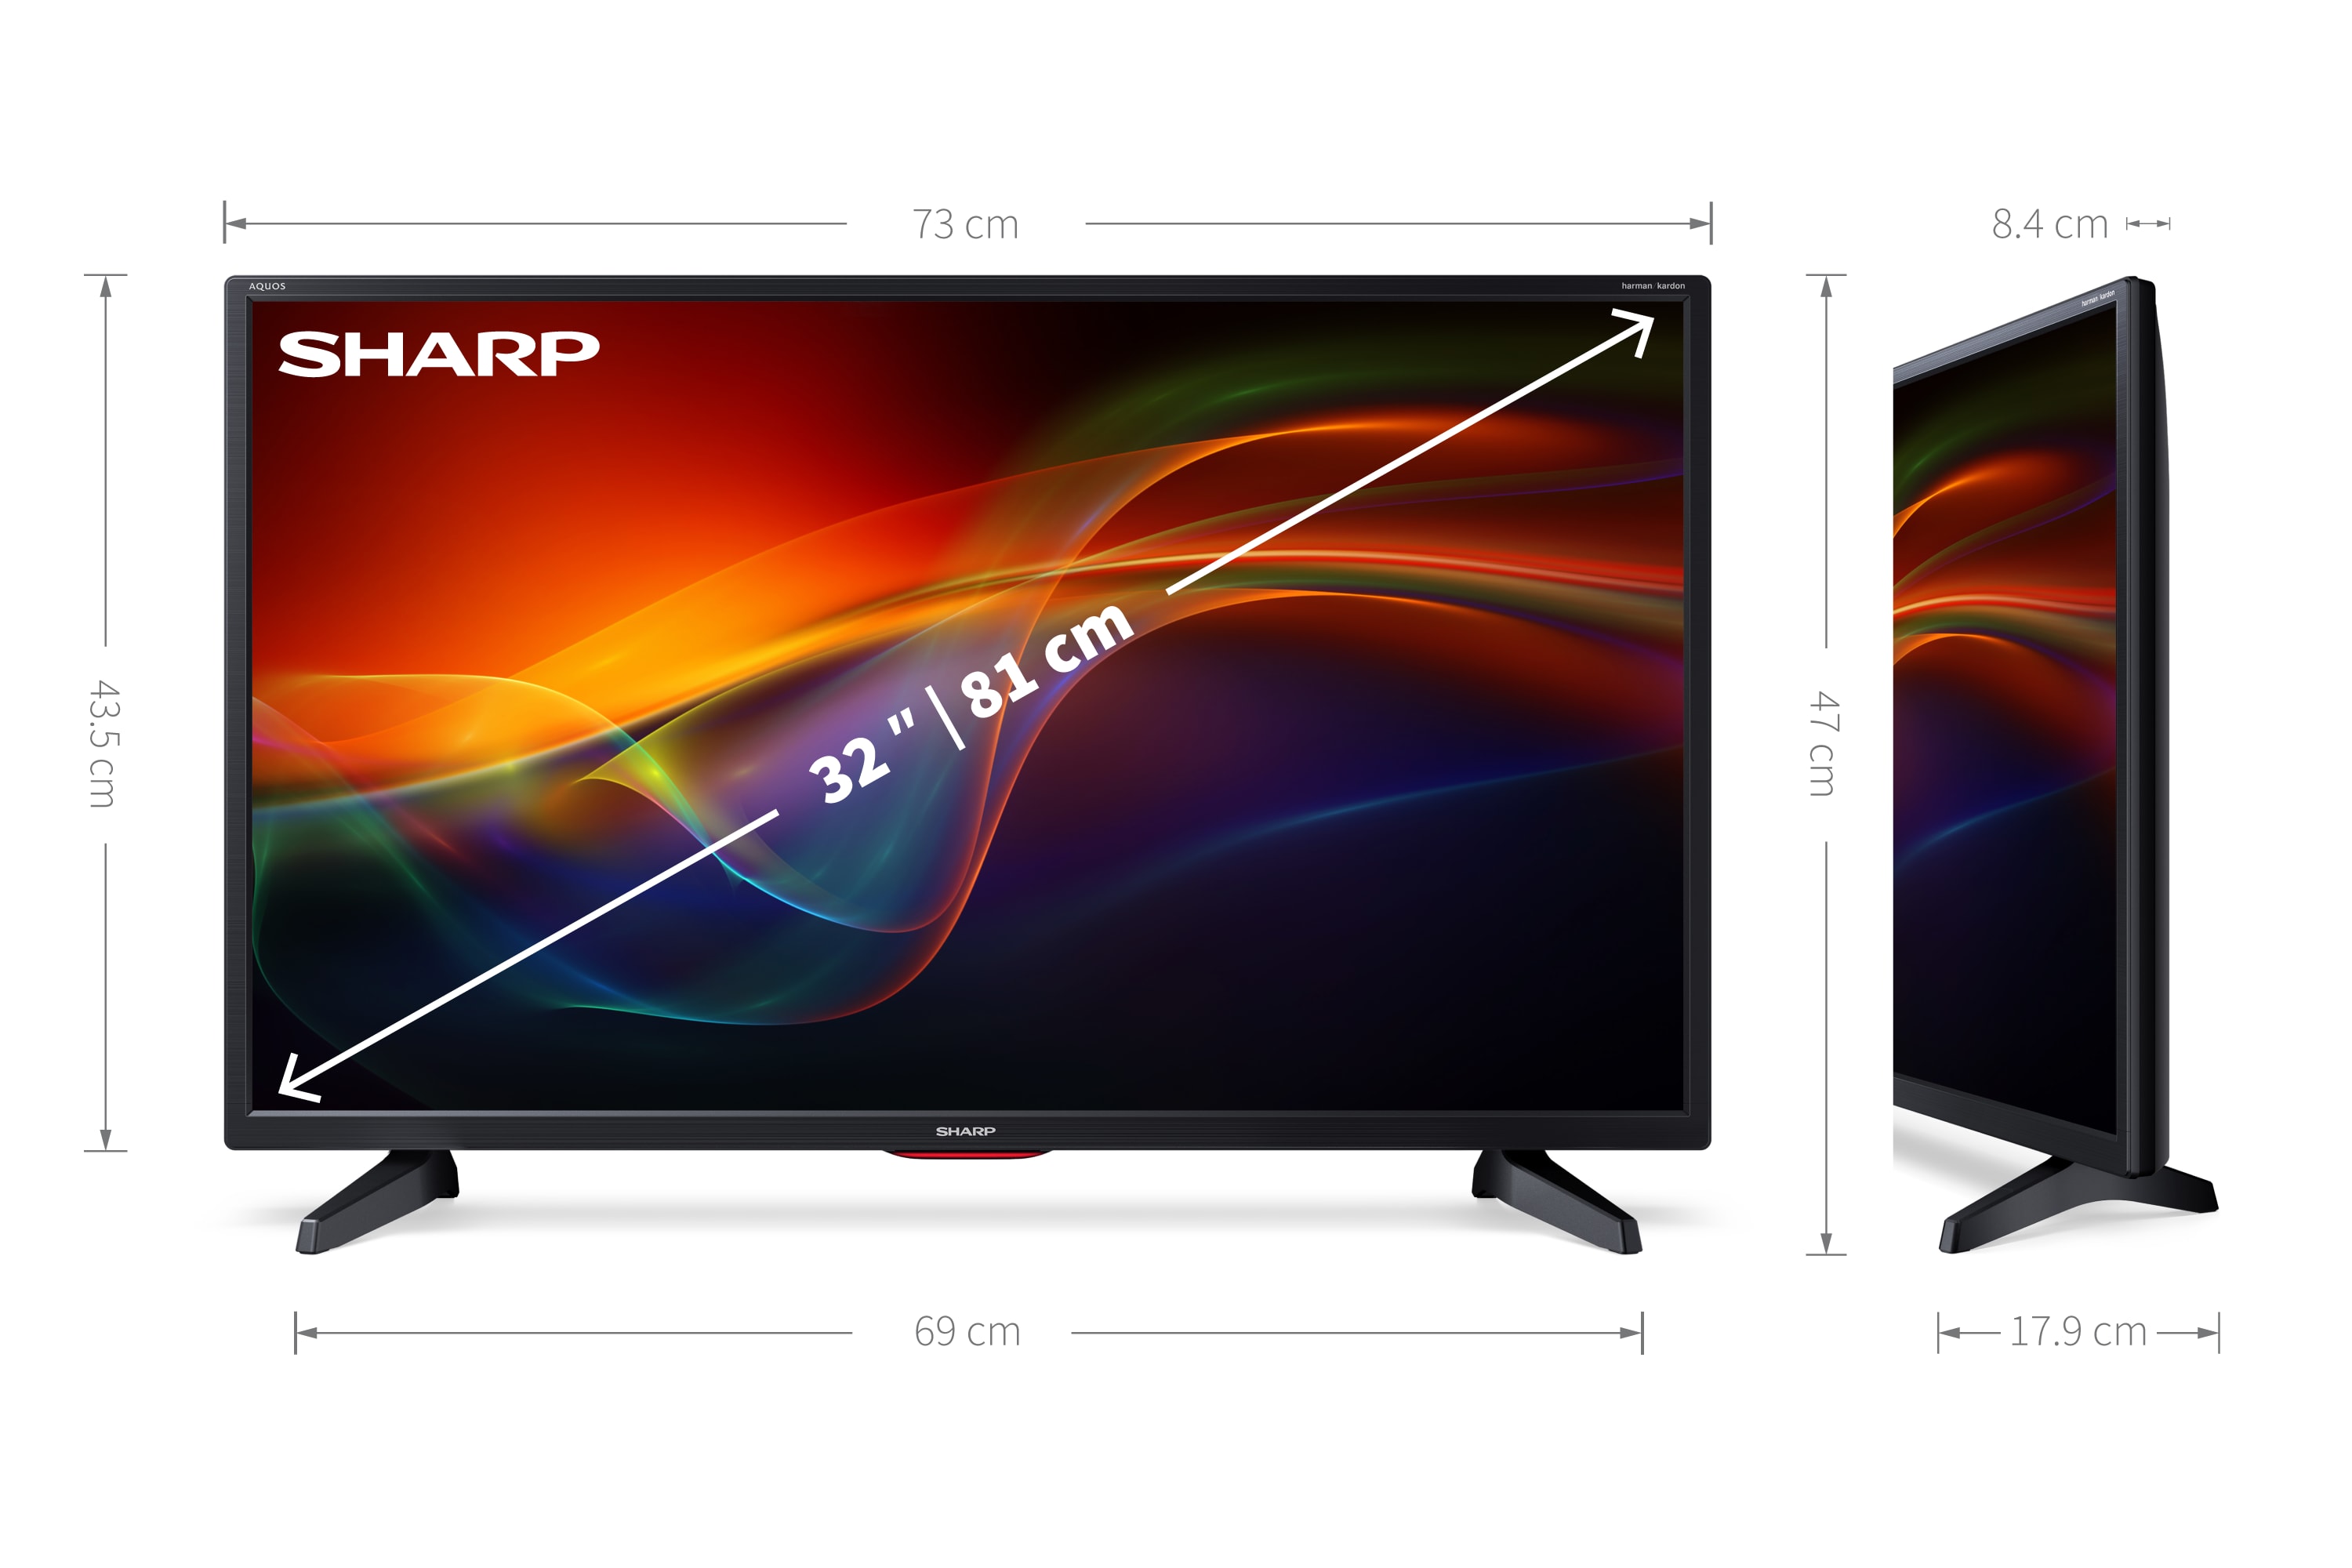 Non-smart-tv HD/Full HD - 32" HD READY TV